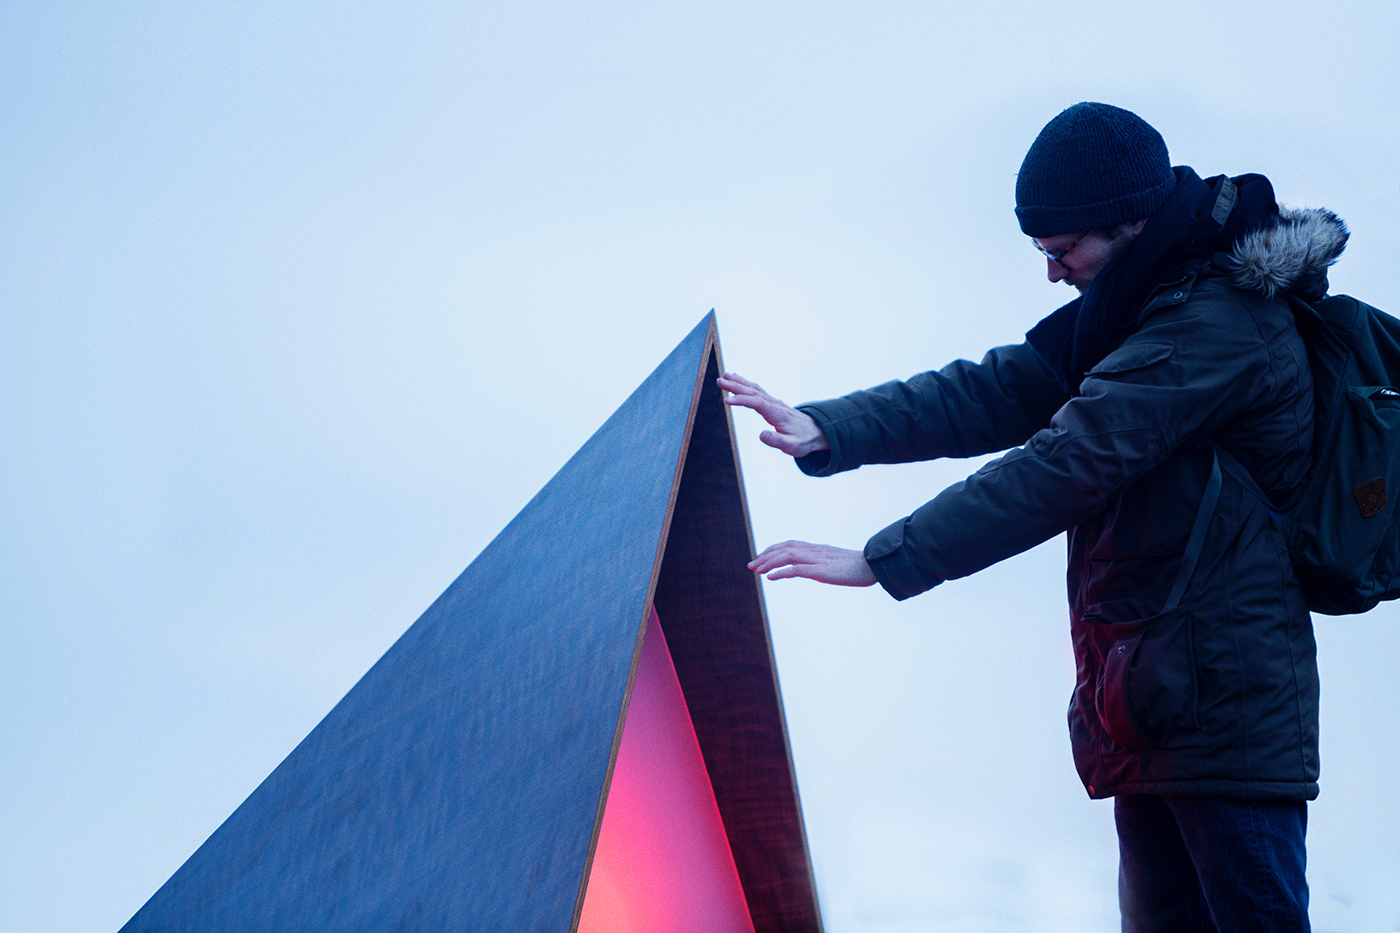 winter triangle light geometry installation interactive reactive sculpture digital